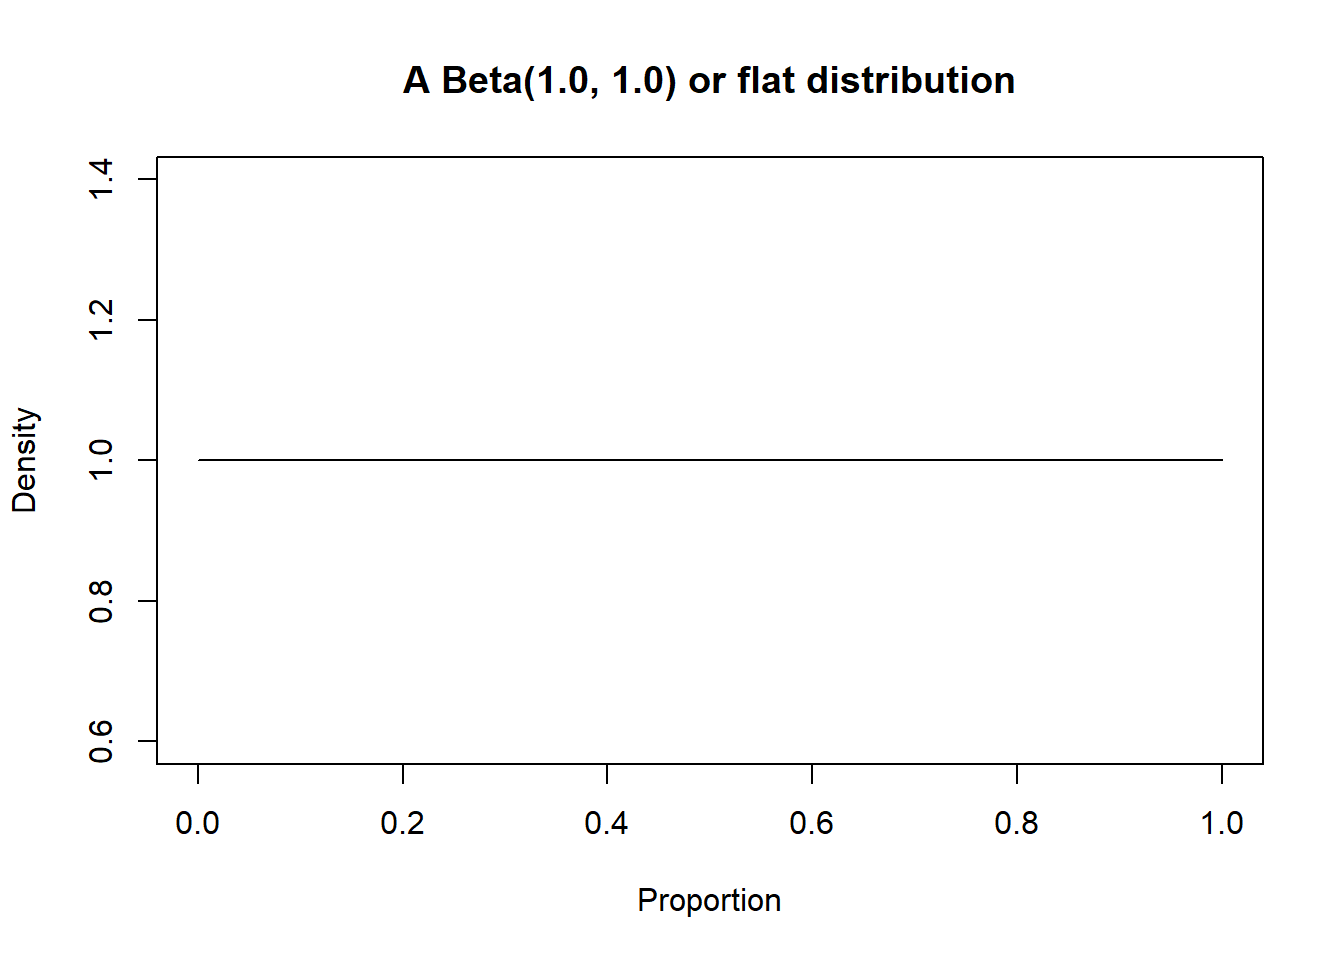 **Figure.** Density curve of a Beta(1.0, 1.0) distribution.